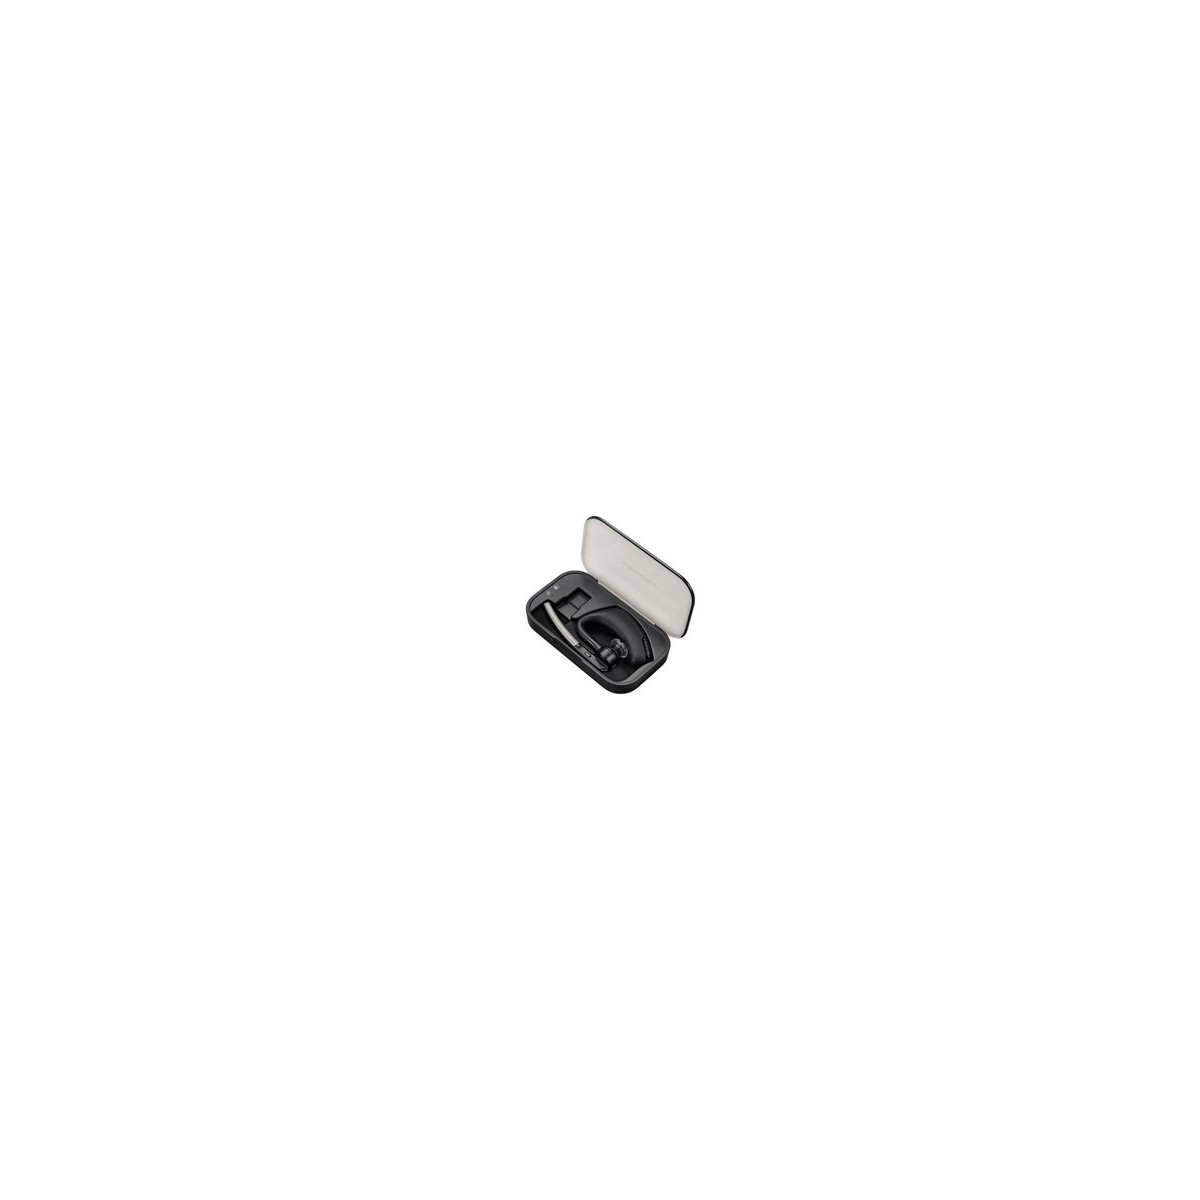 Poly Legend - Headset - Ear-hook - Office-Call center - Black - Silver - Monaural - Digital